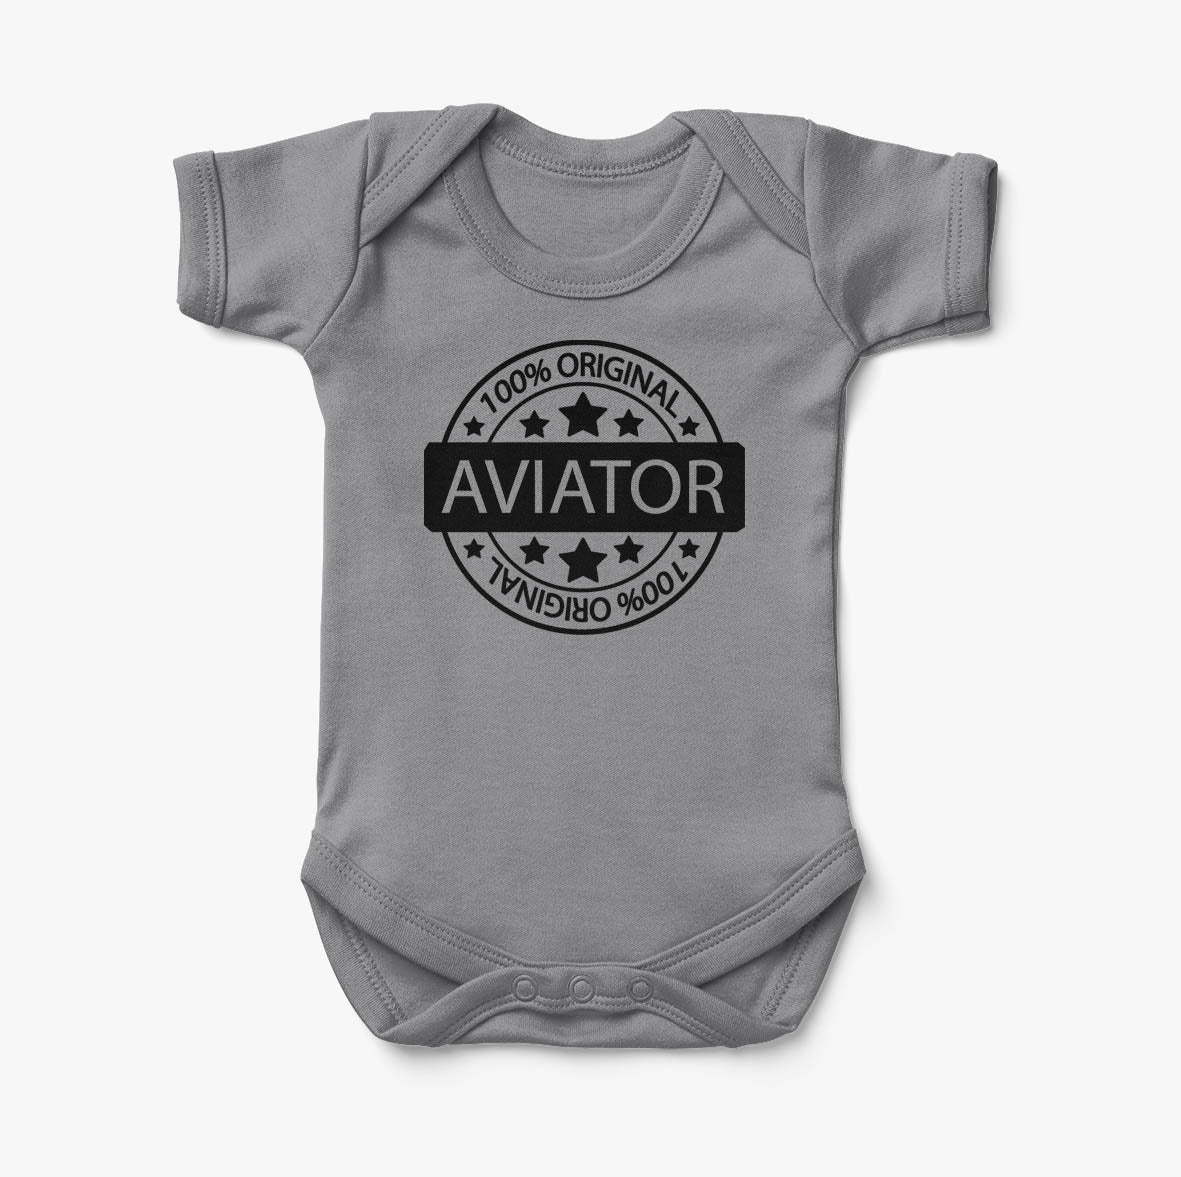 %100 Original Aviator Designed Baby Bodysuits